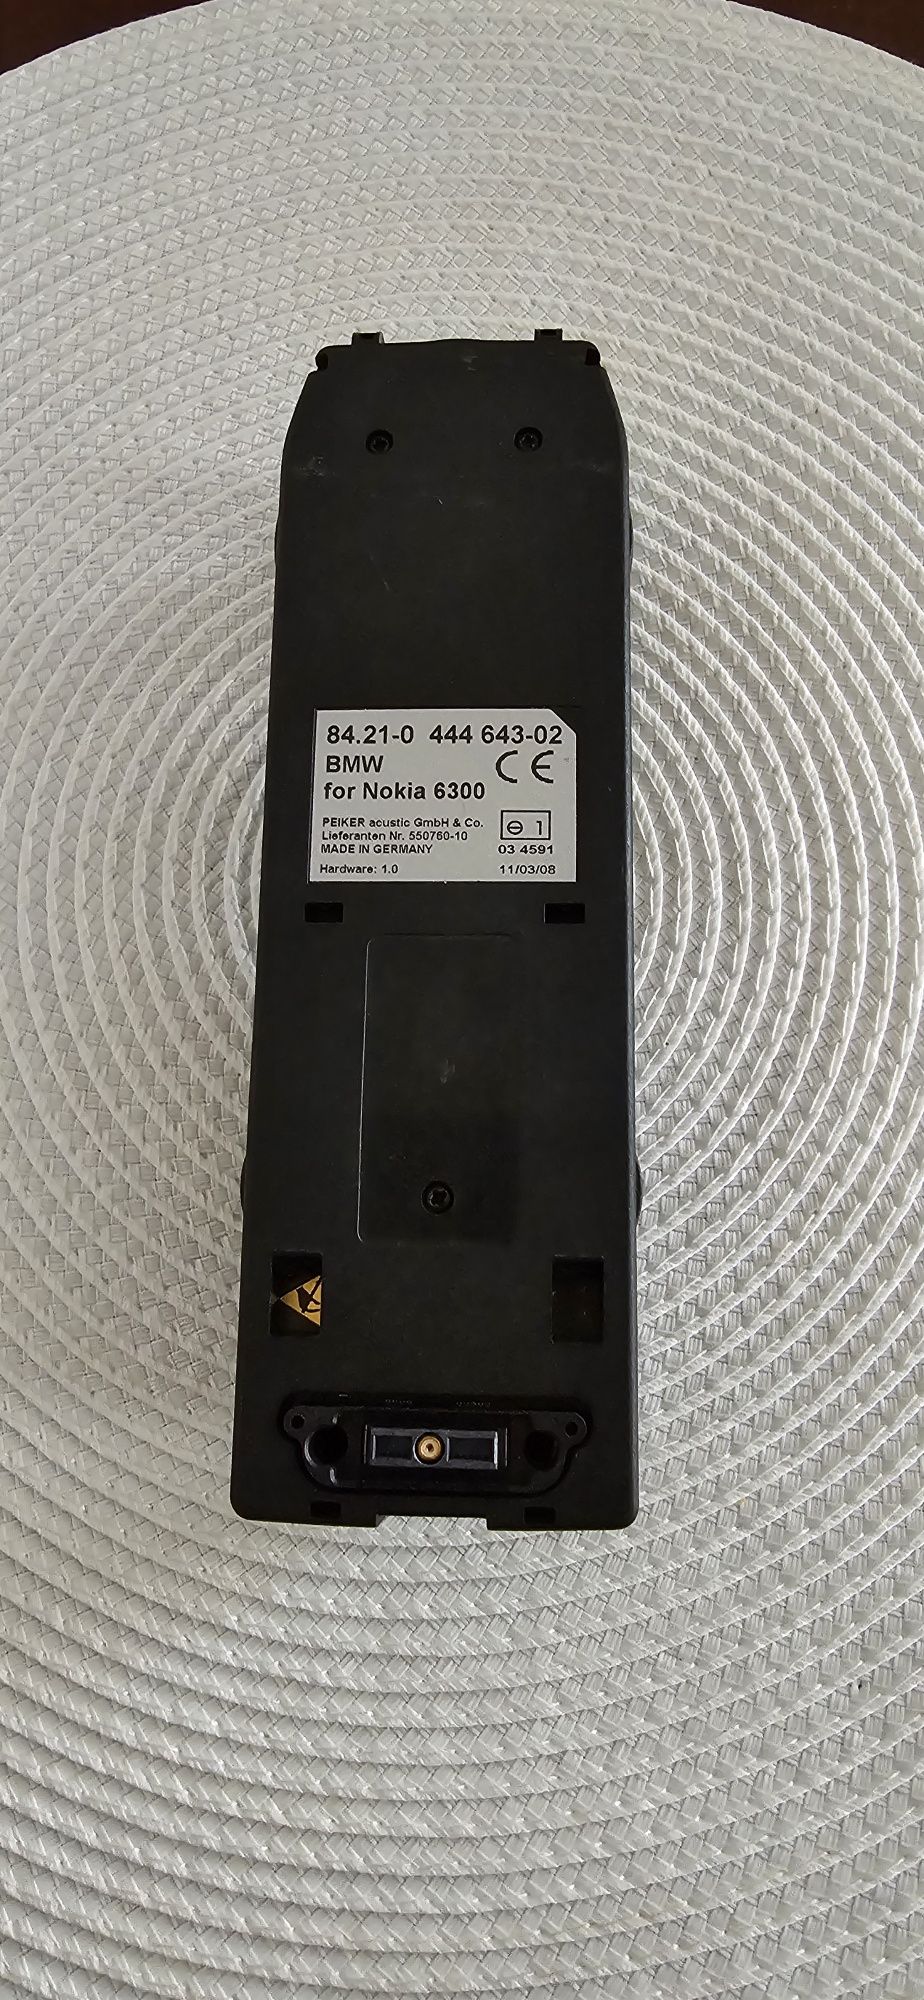 Oryginalny Adapter Snap-In BMW E46 E39 Nokia